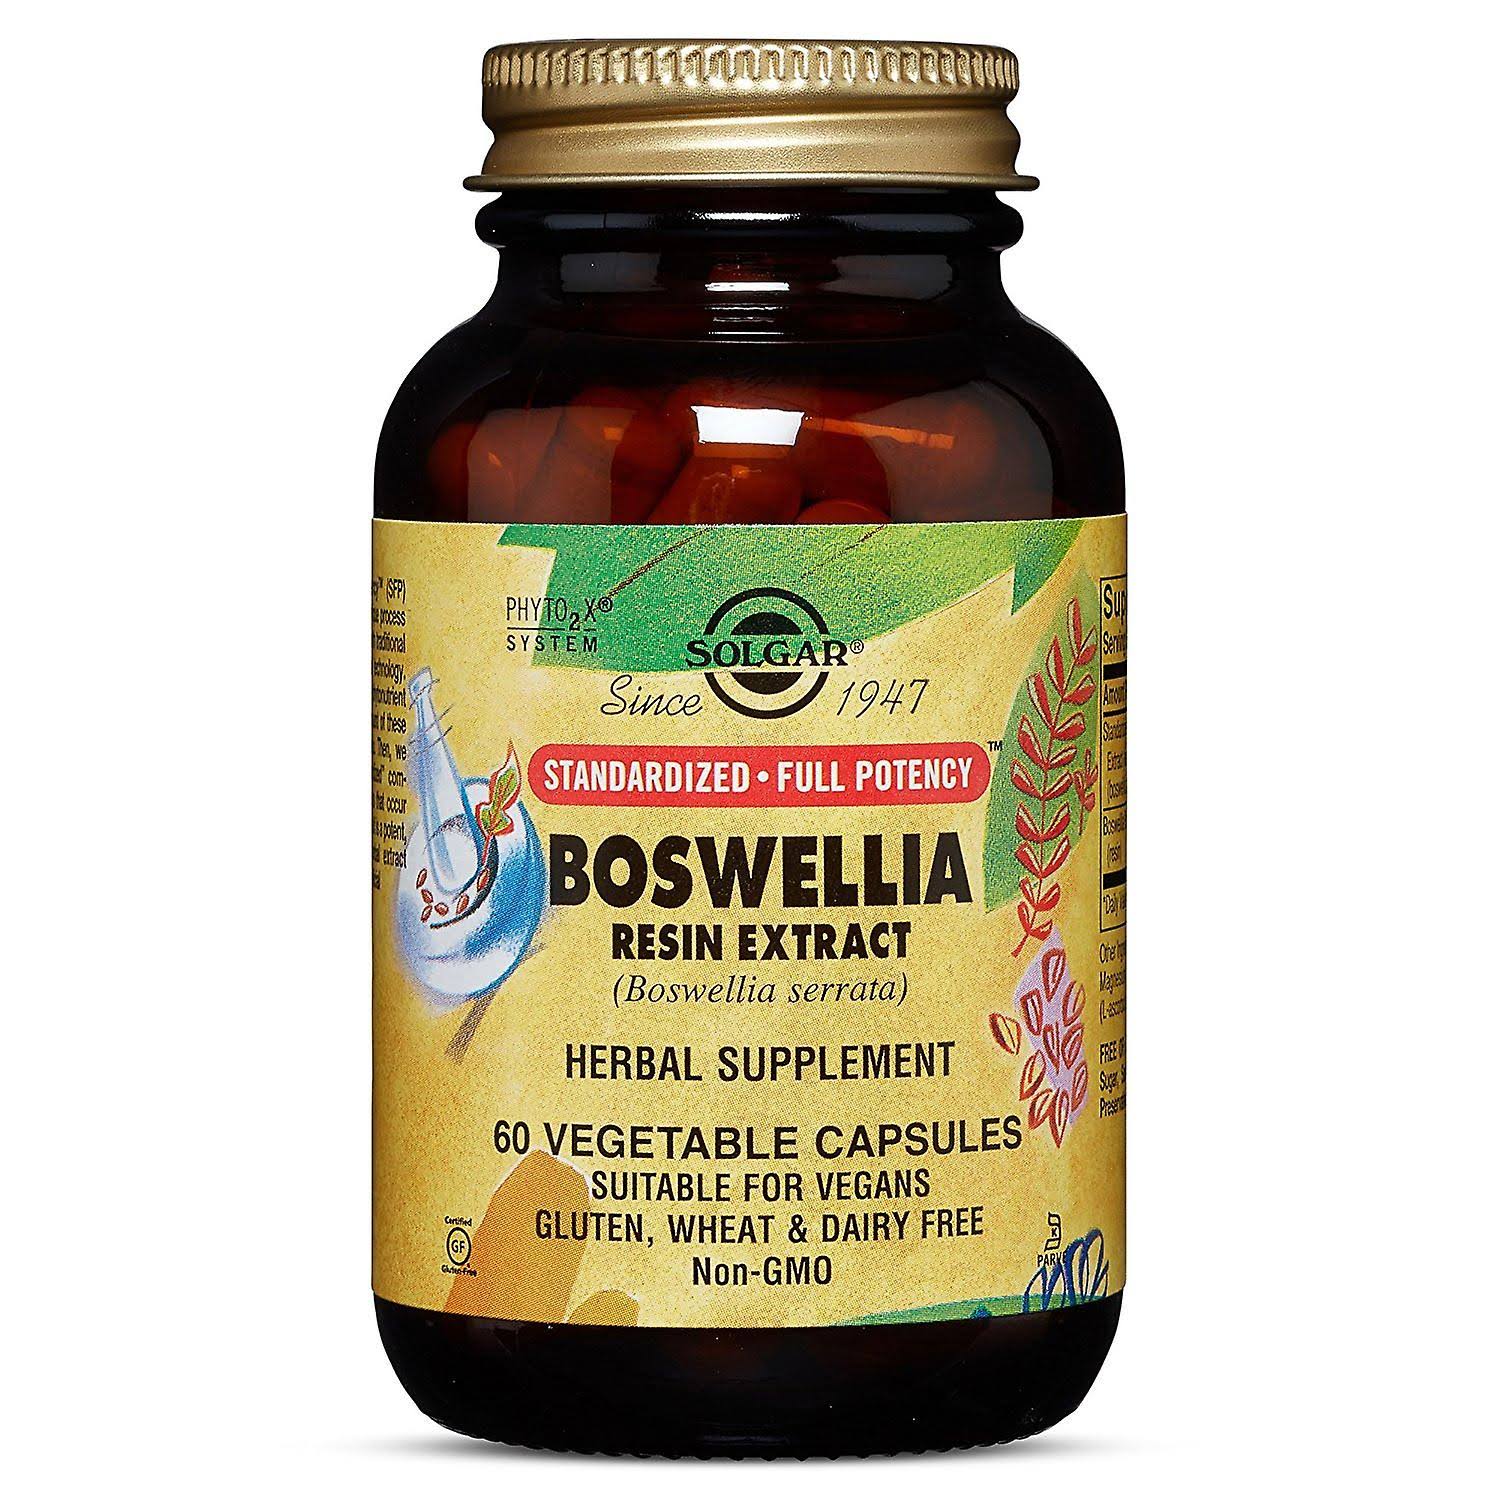 Solgar Boswellia Resin Extract - 60 capsules